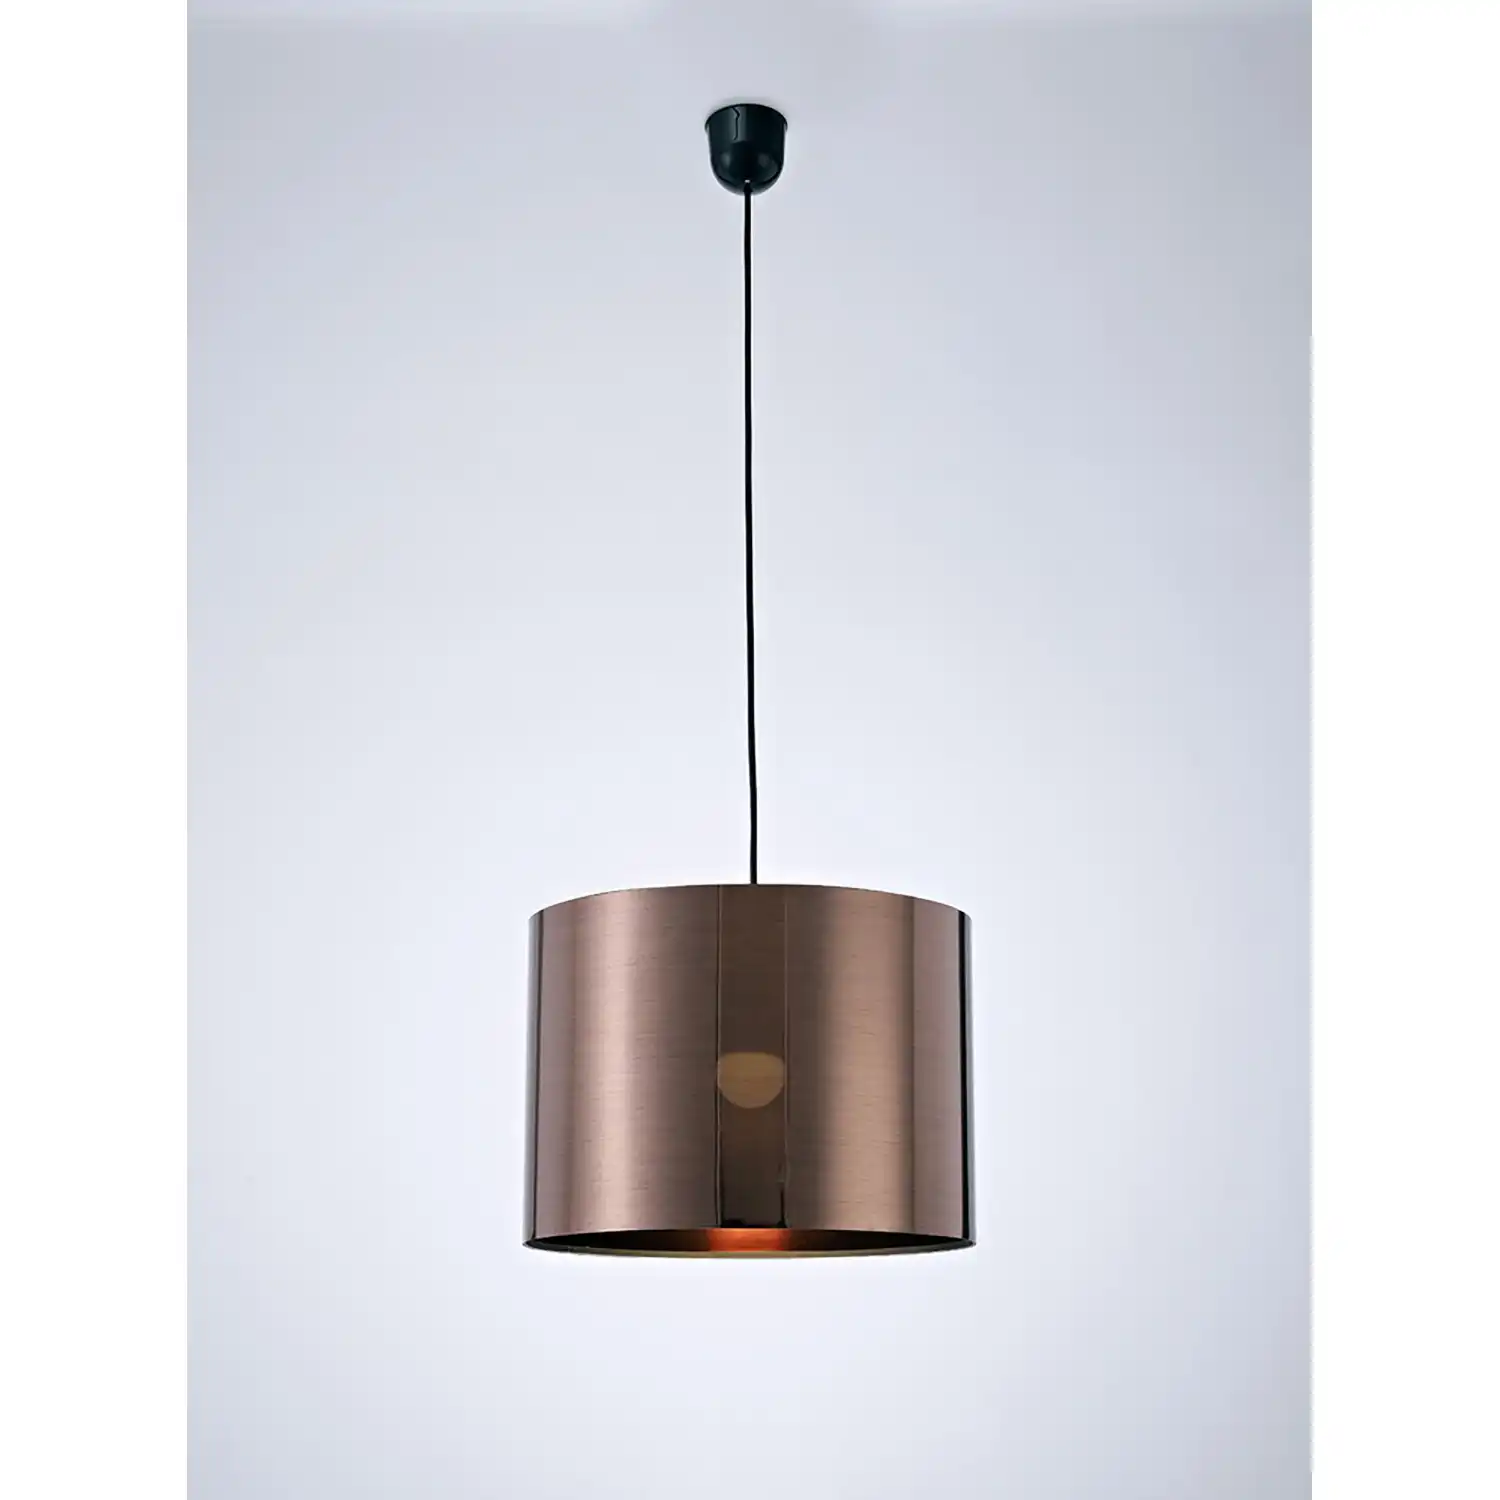 Dako Black Pendant 1 Light E27 With 350 x 250mm Metallic Bronze Finish Cylinder Shade, c w Ceiling Bracket